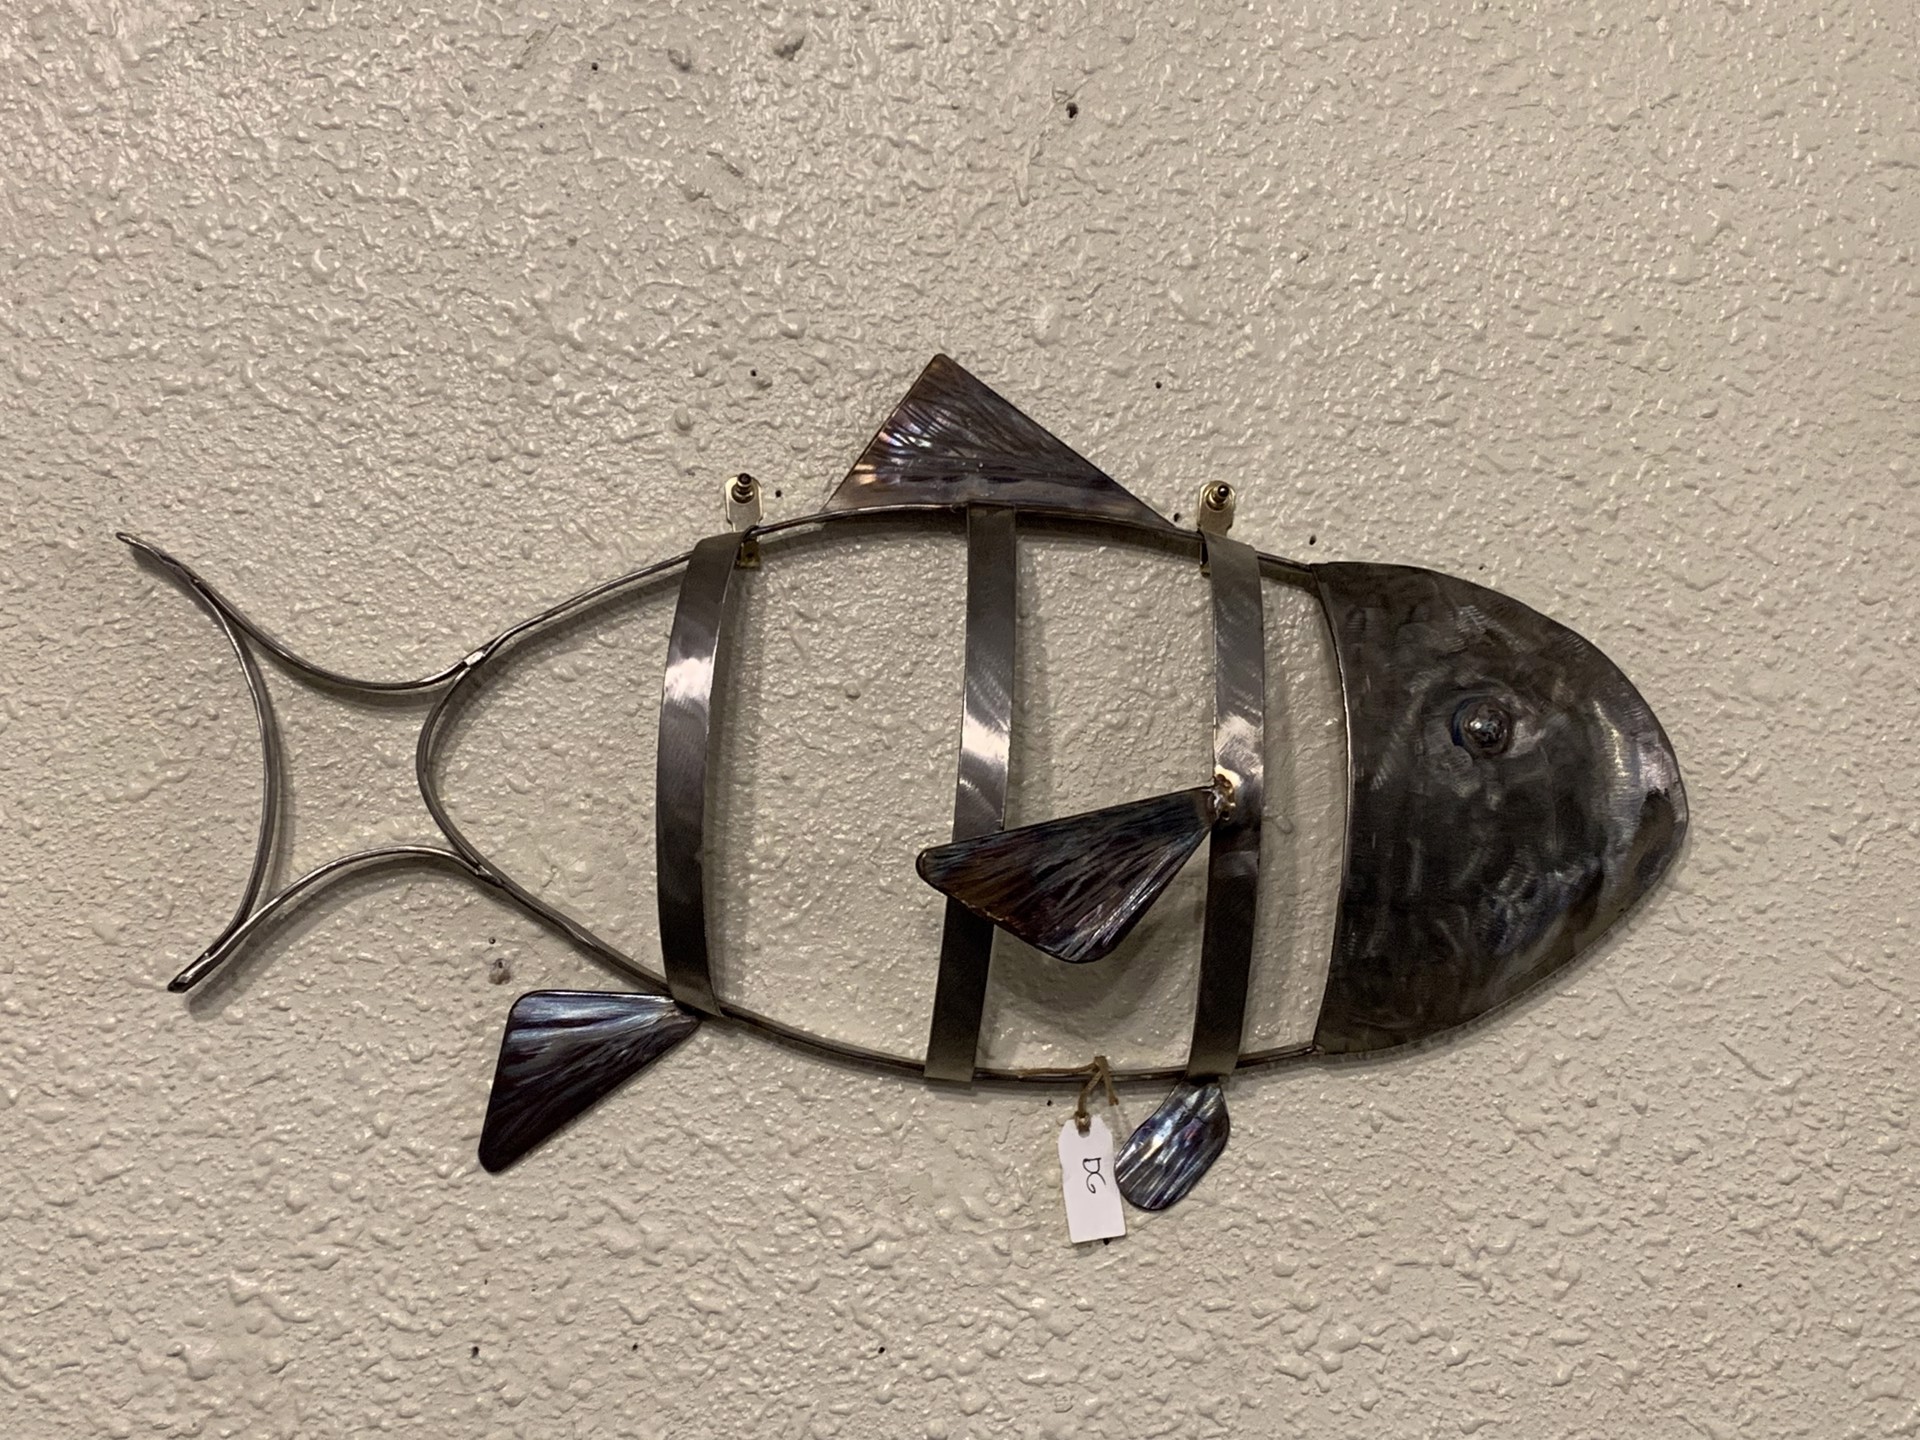 Steel Fish by David Goecke